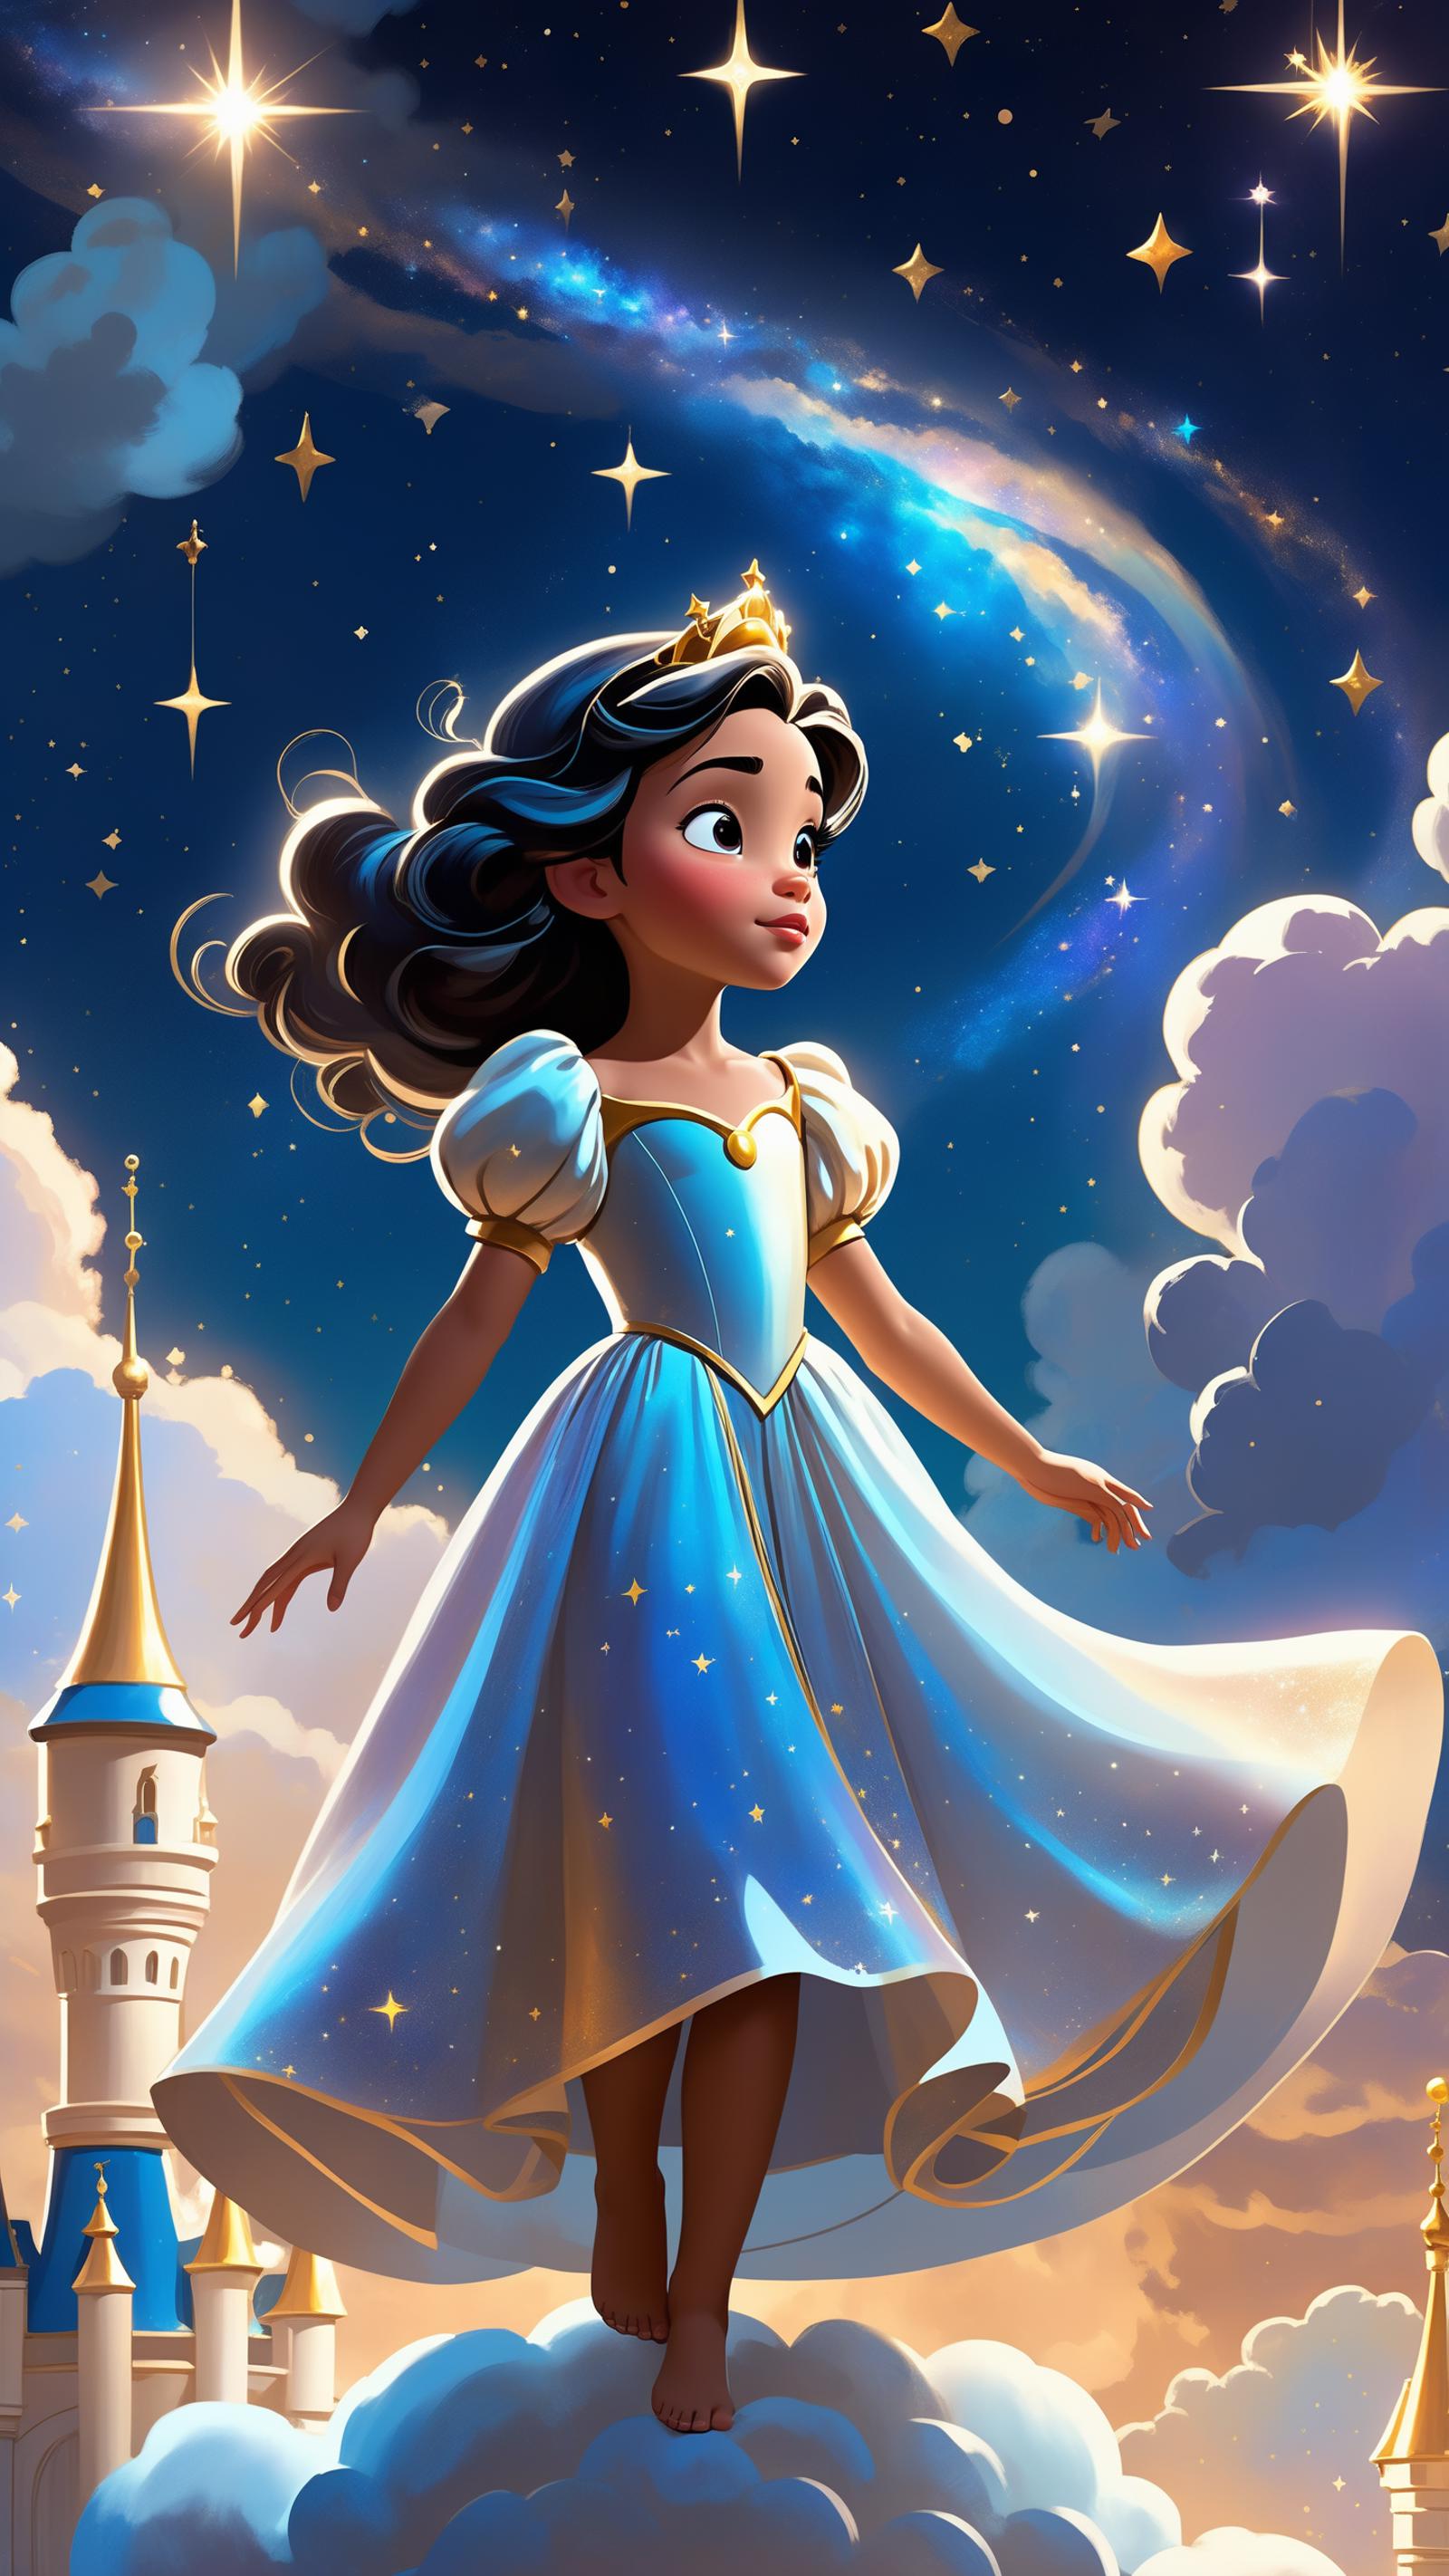 A Disney princess flying through the sky at night.